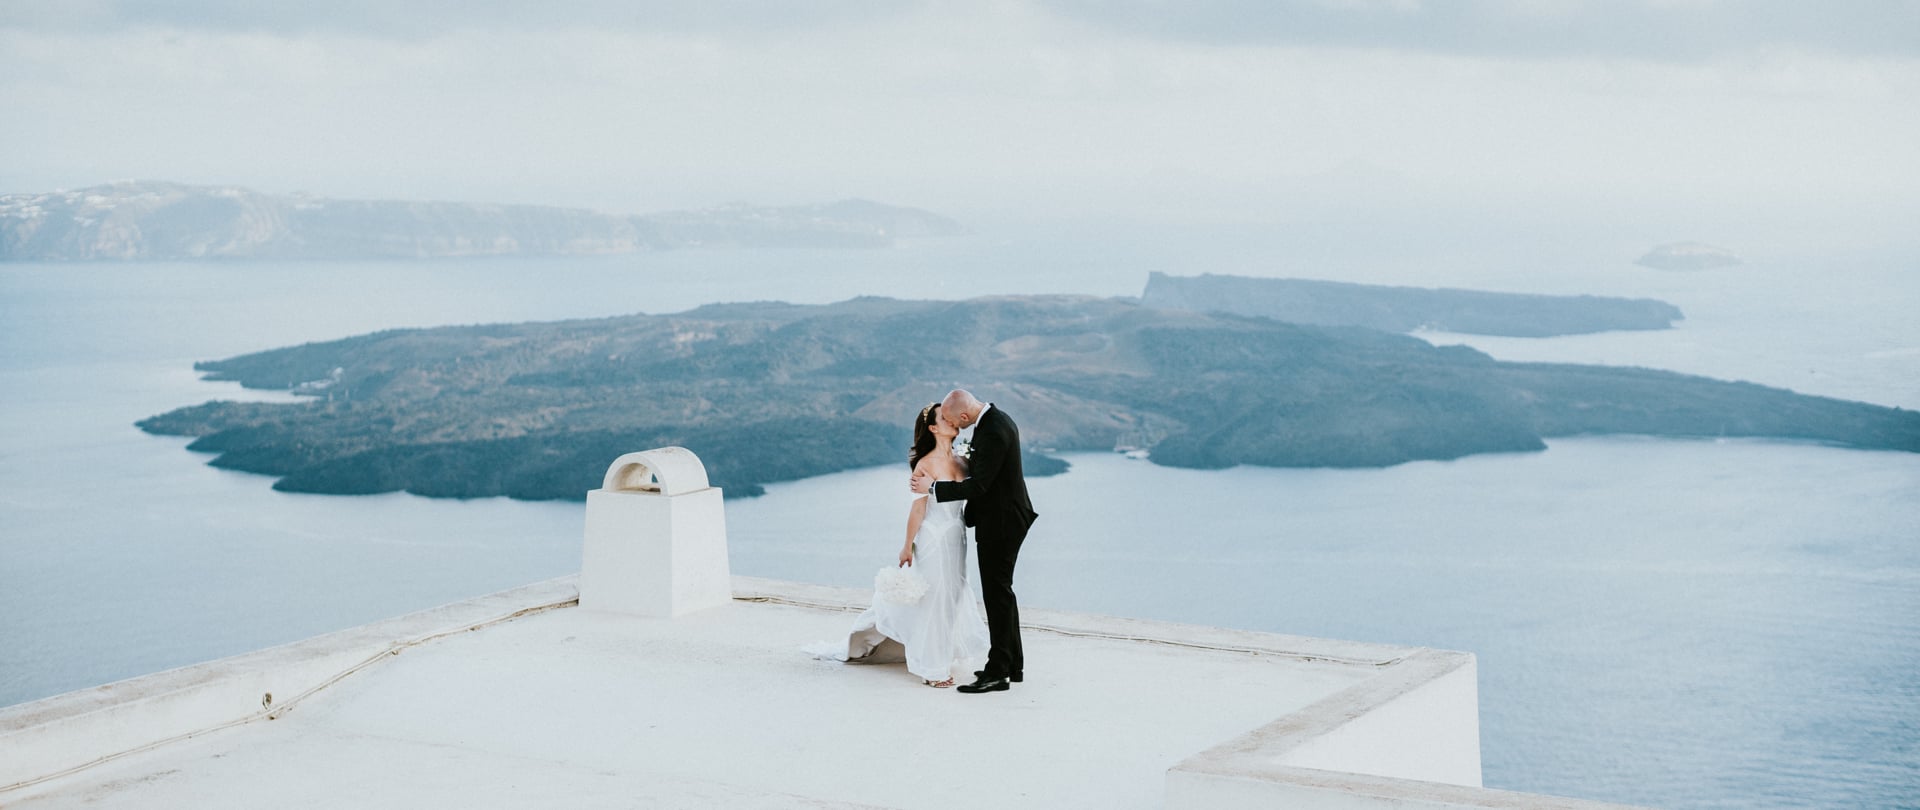 Niki & Hugues Wedding Video Filmed at Santorini, Greece